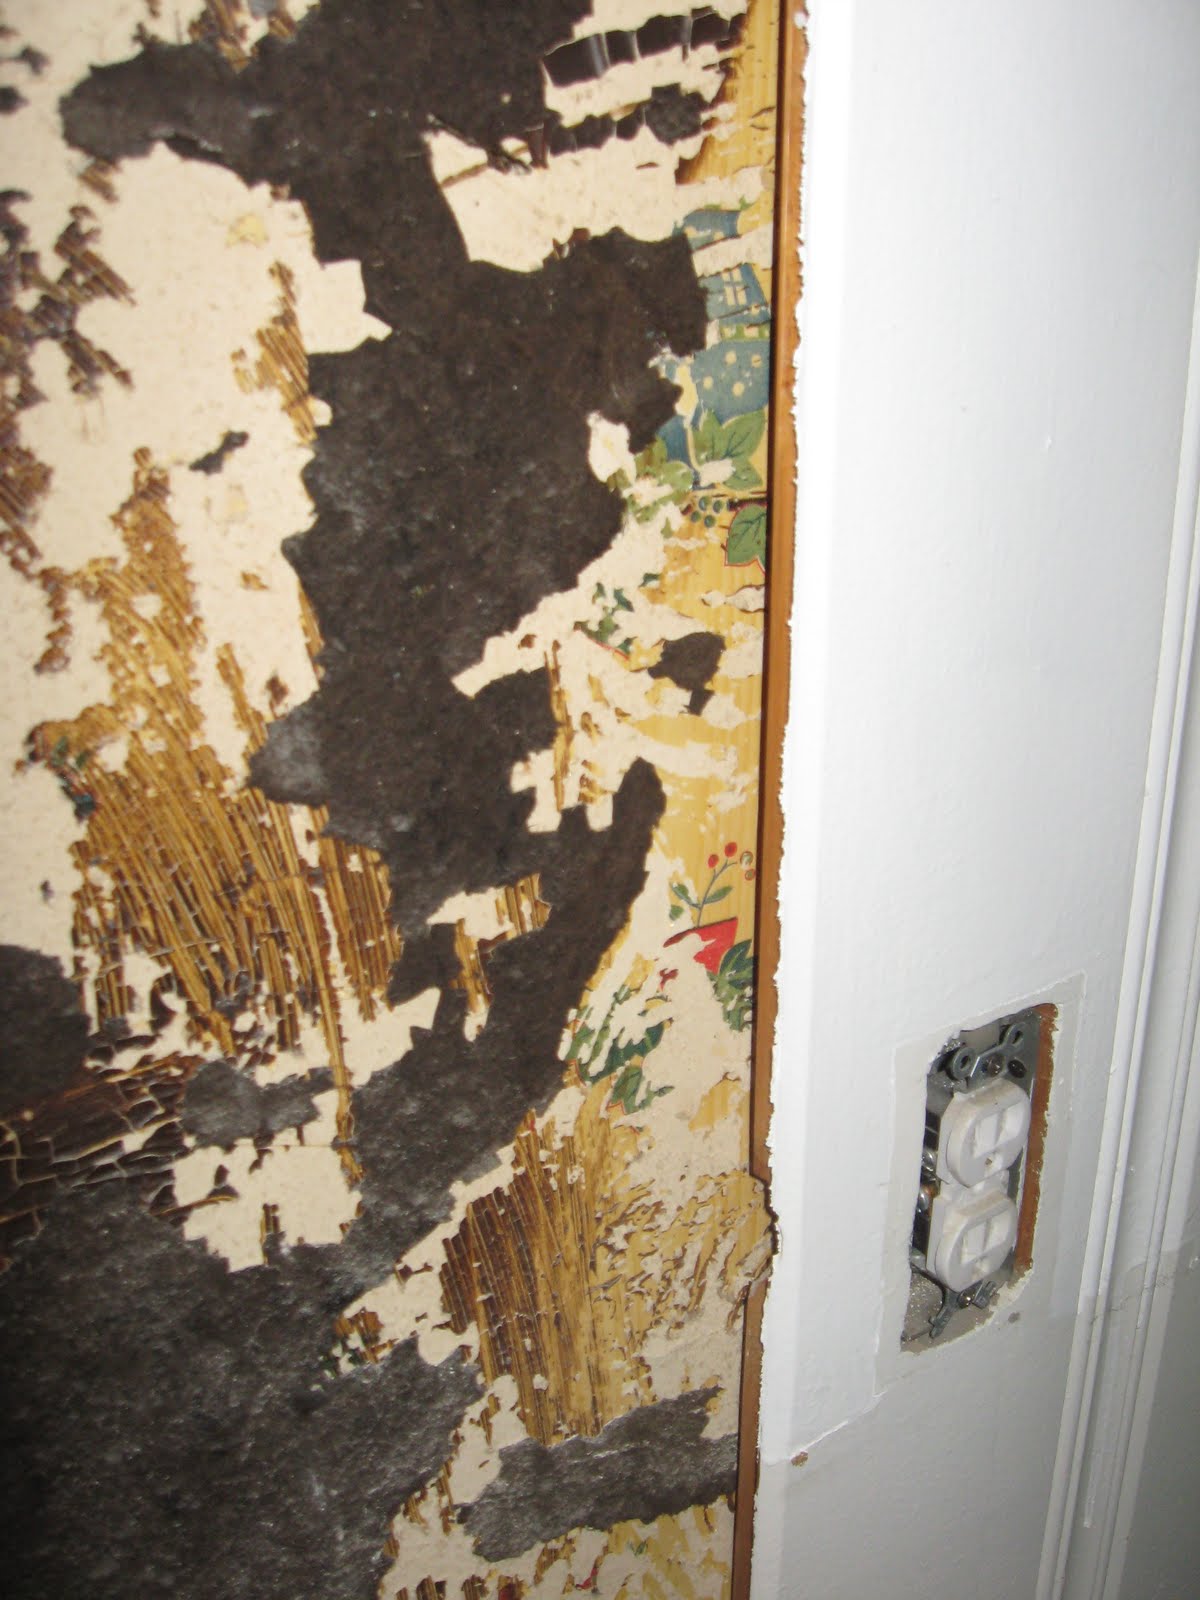 hd-wallpapers-hd: Wallpaper Glue Removal Plaster Wall